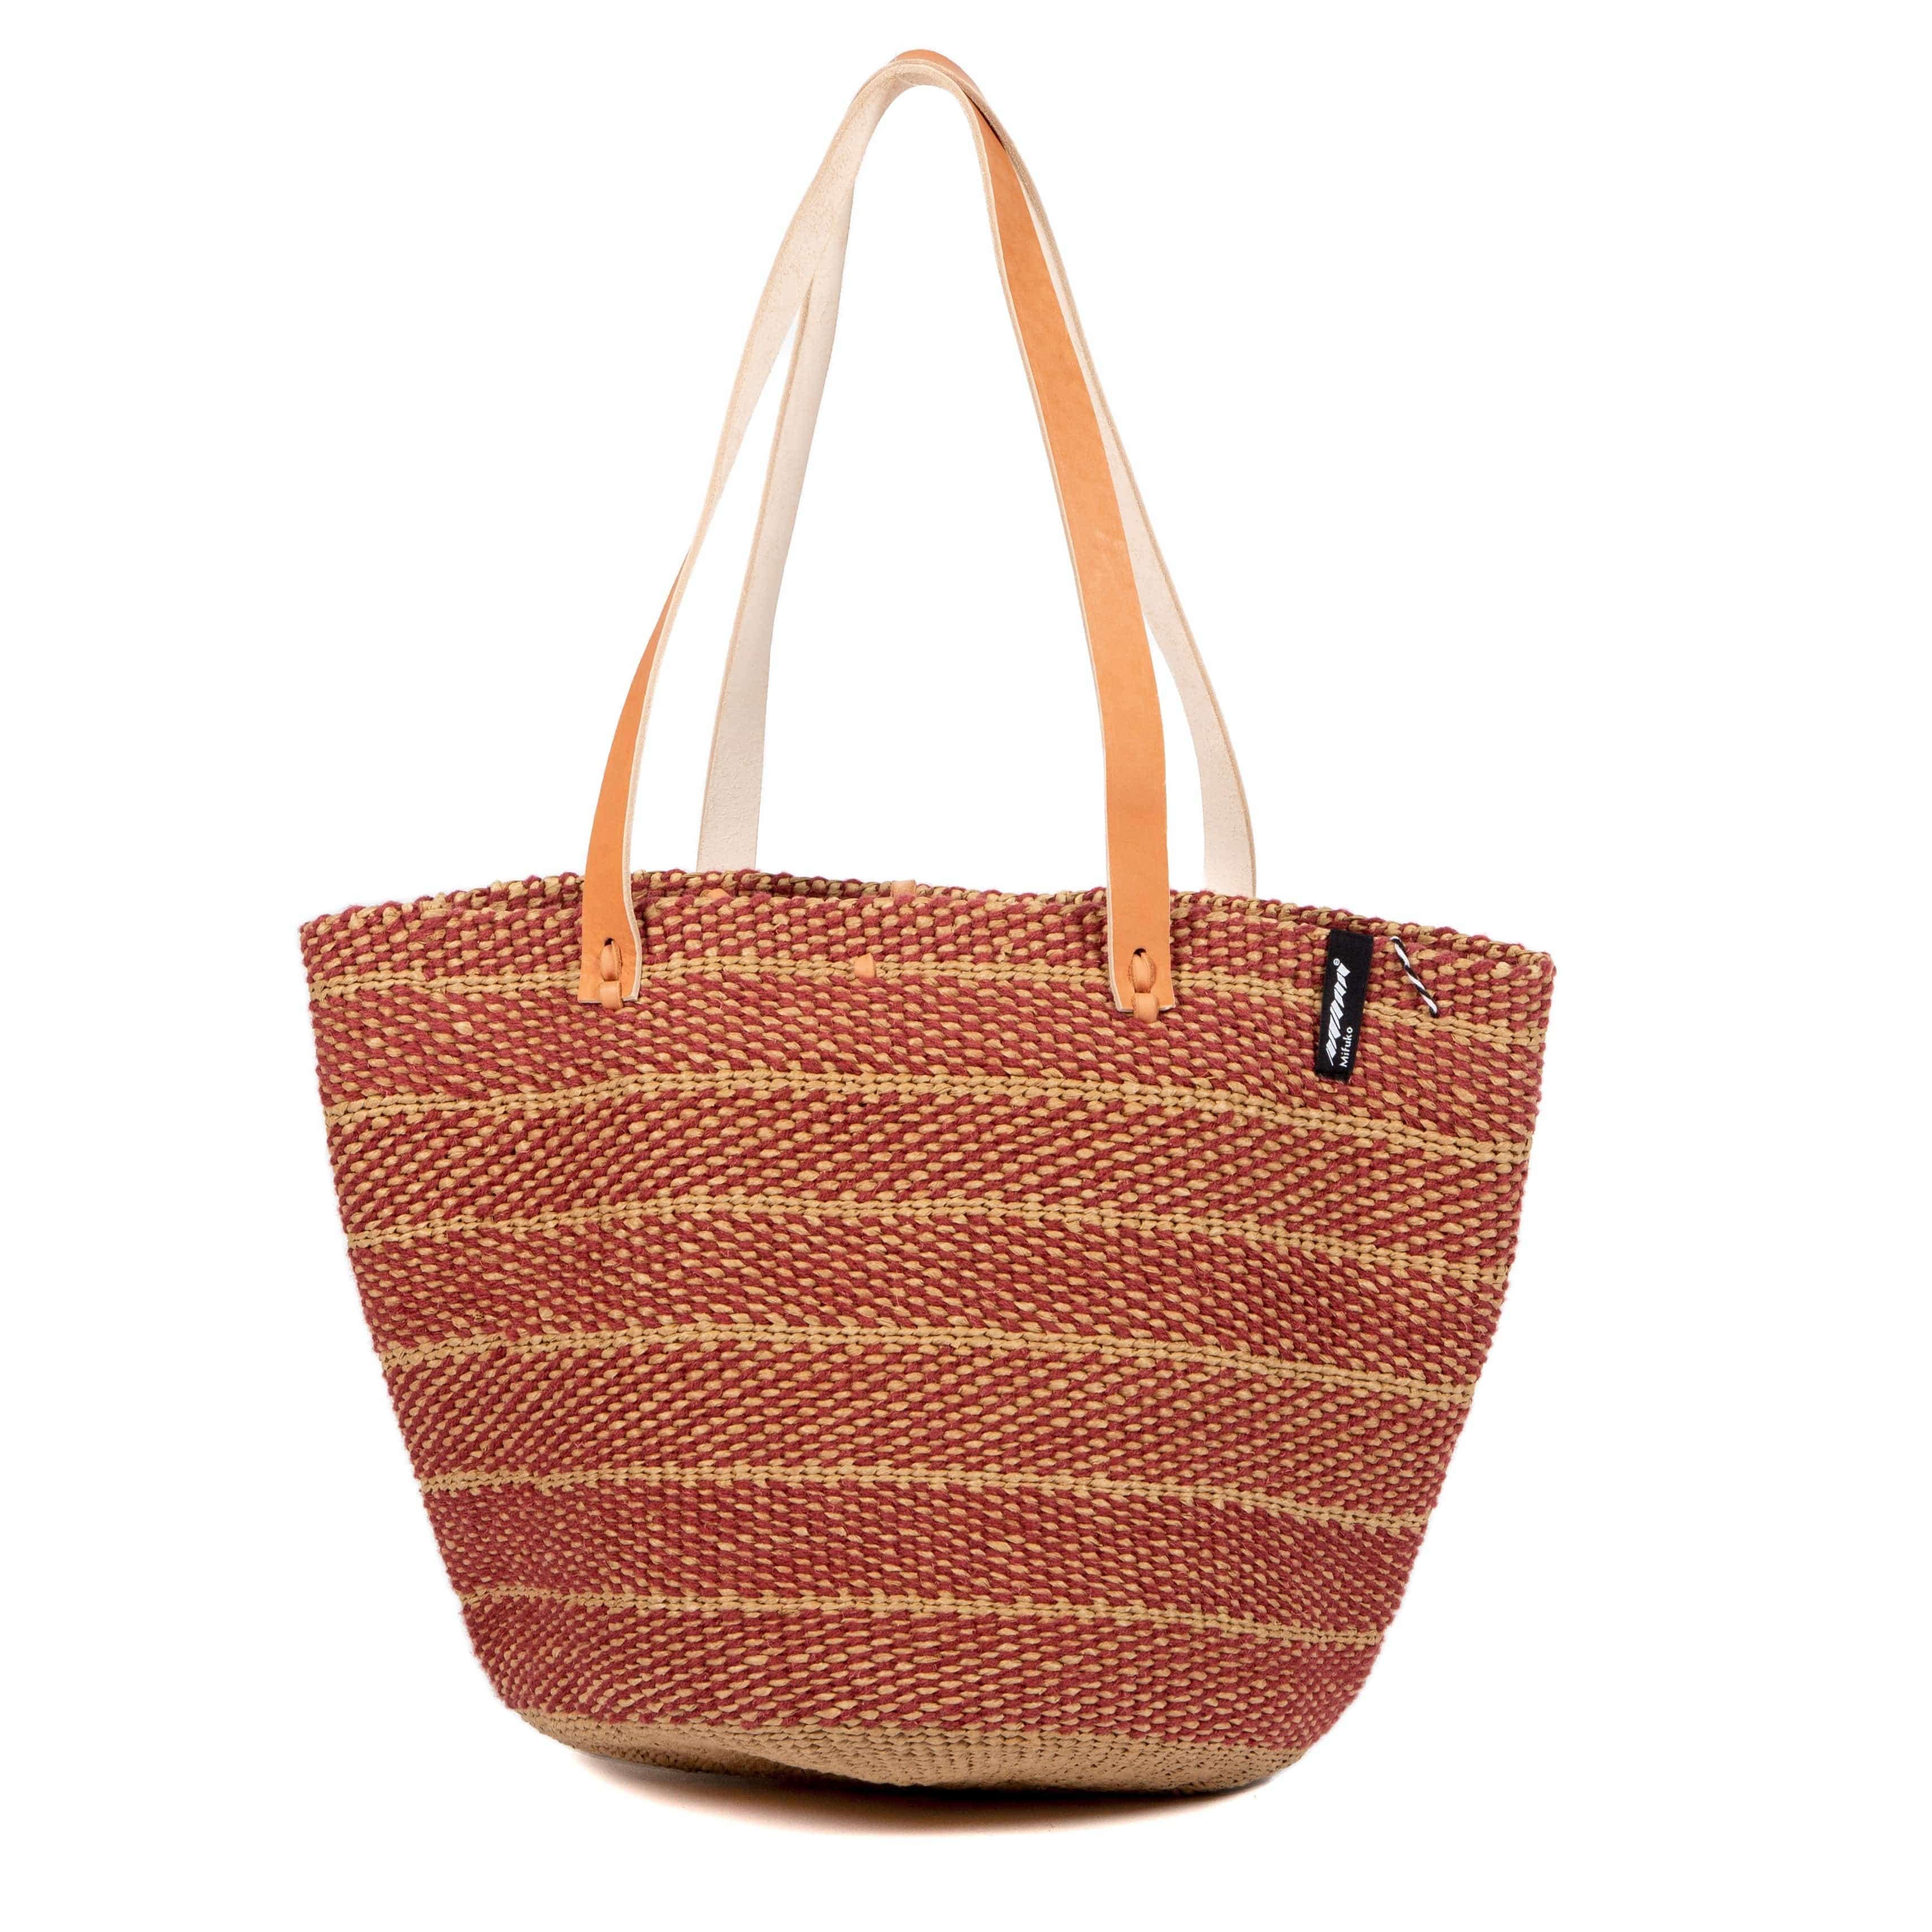 Mifuko Wool and paper Shopper basket Pamba shopper basket | Dark red twill weave M